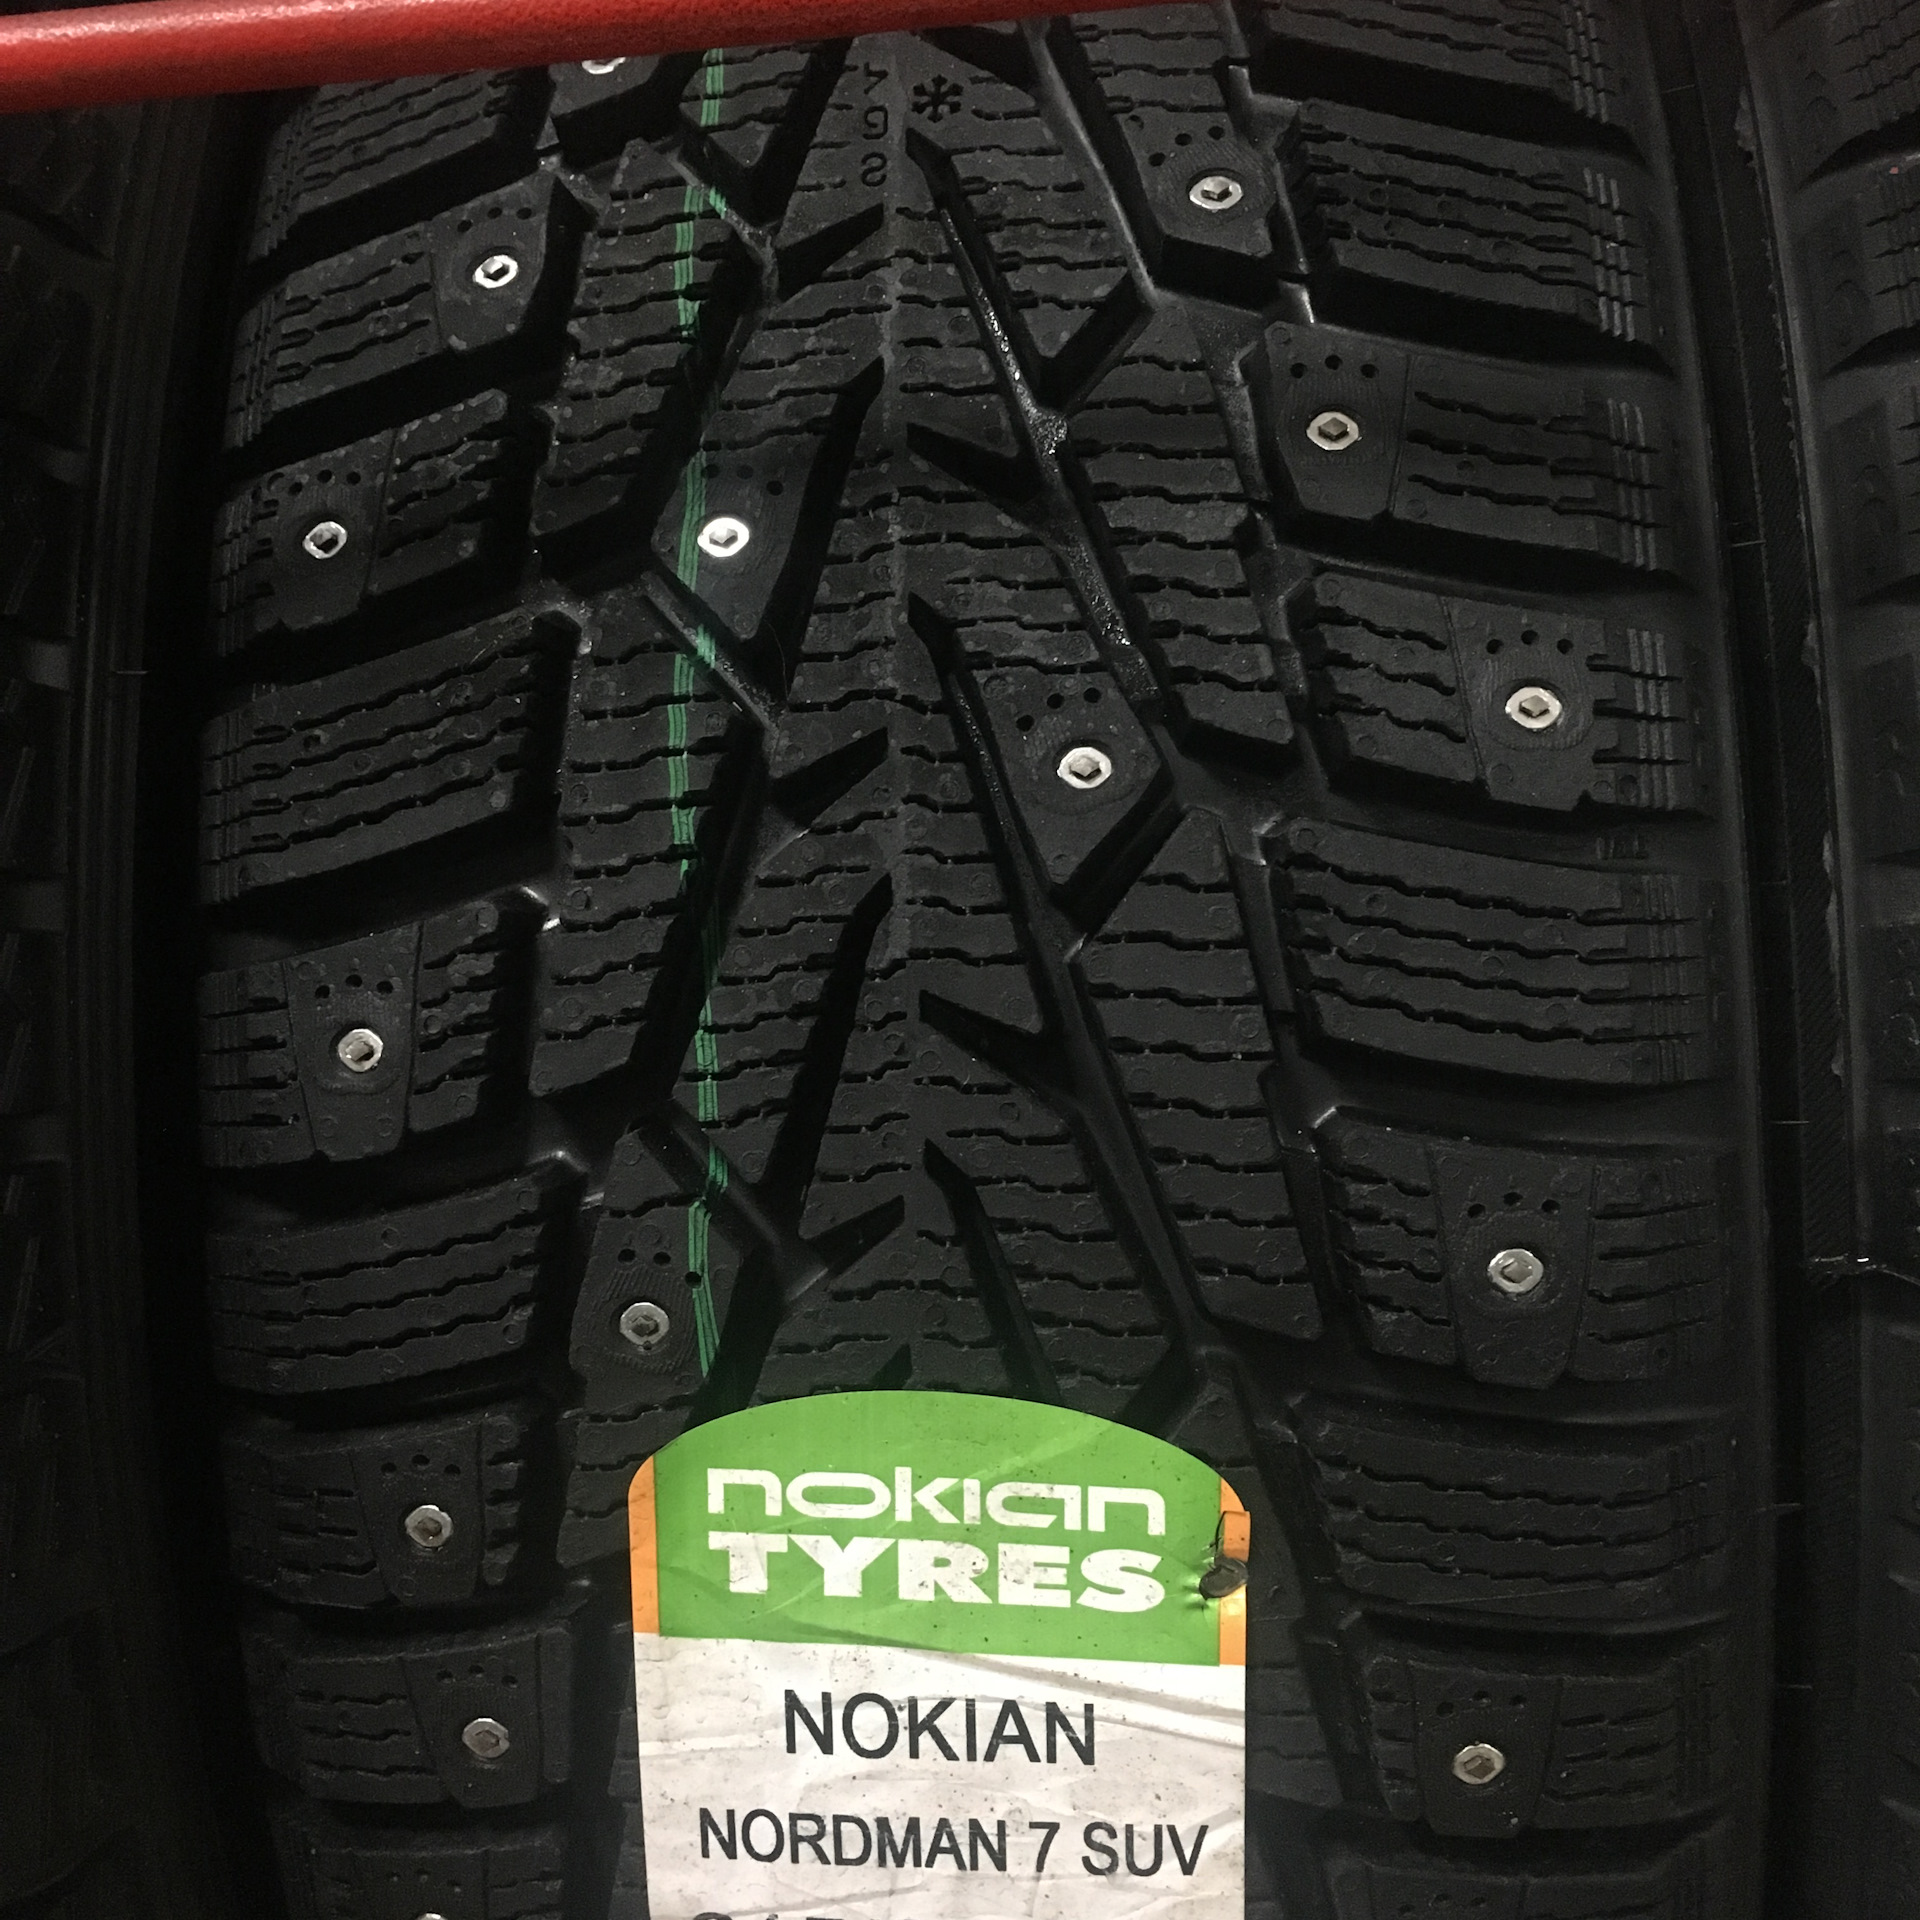 Ikon tyres nordman suv отзывы. Нордман 7 SUV. Nokian Nordman 7 SUV. Nokian Tyres Nordman 7 SUV. Нордман 7 SUV 215 65 16.